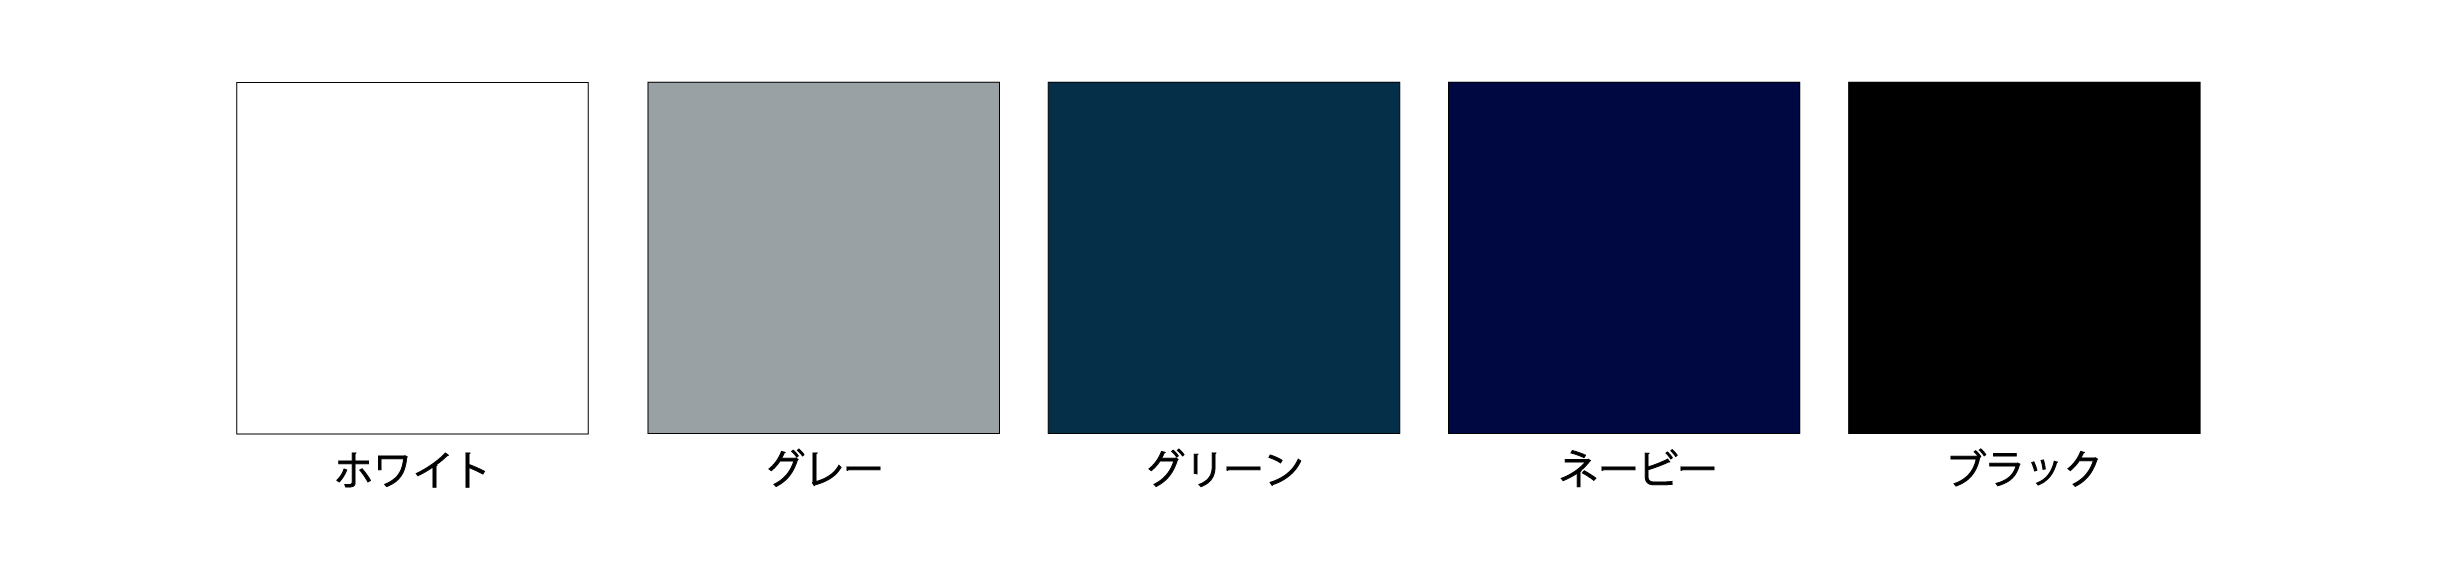 kaminoito-color.jpg